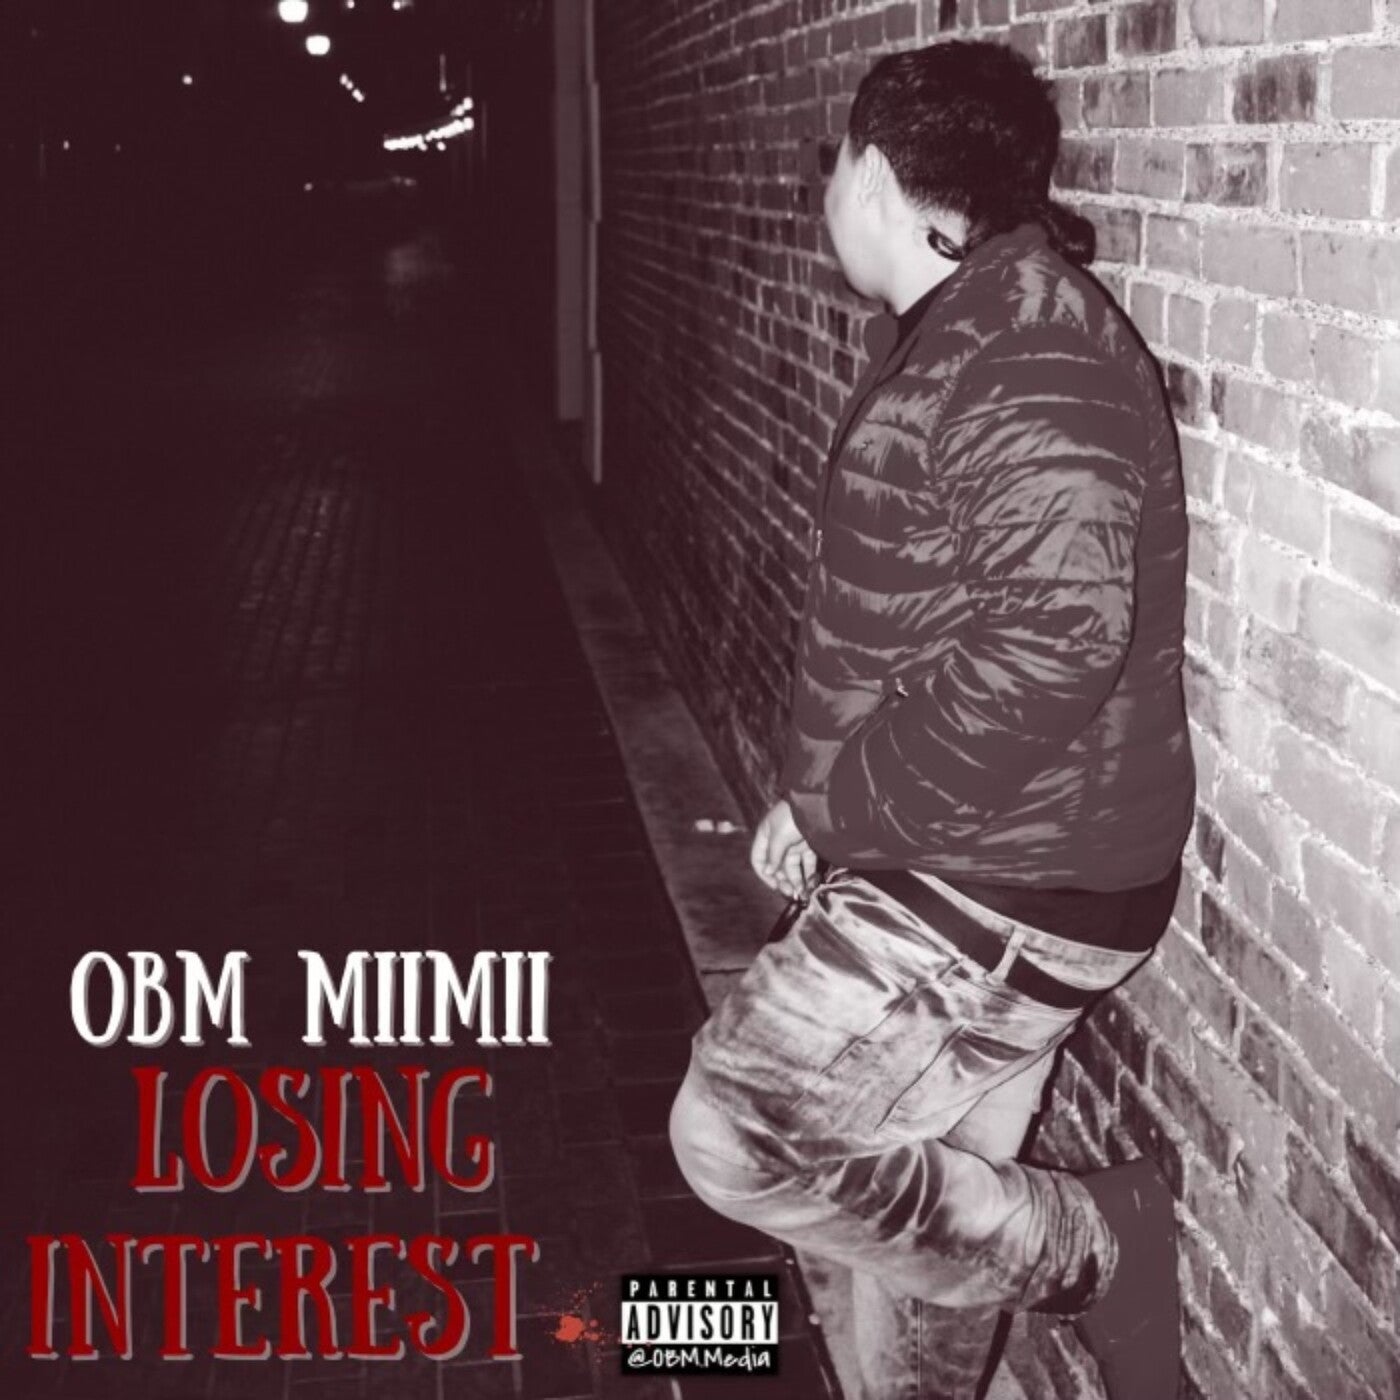 Losing Interest by OBM MiiMii on Beatsource